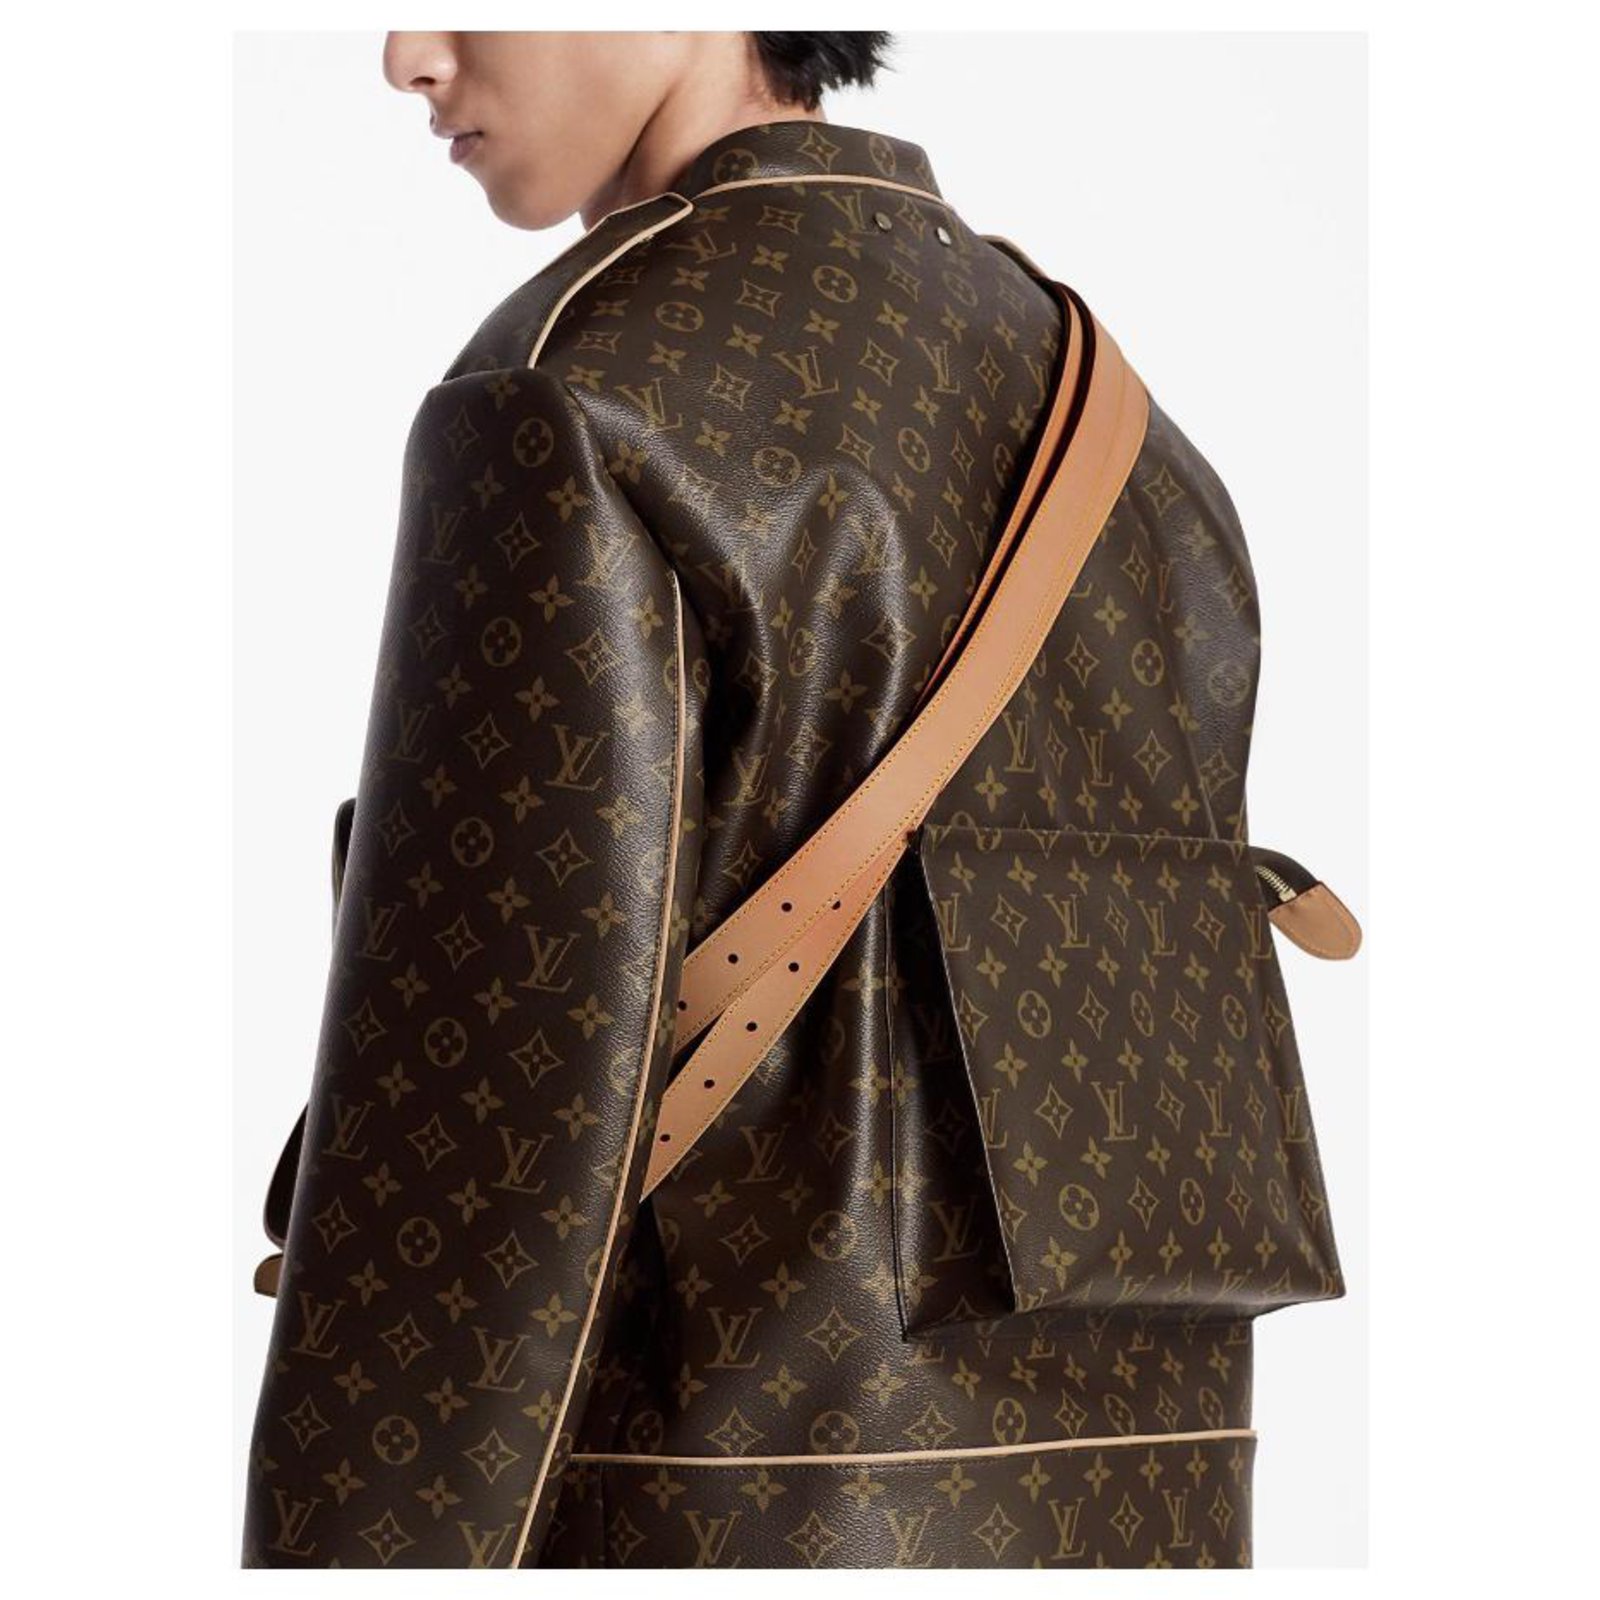 Aurizn - The Louis Vuitton Monogram Admiral Jacket is a